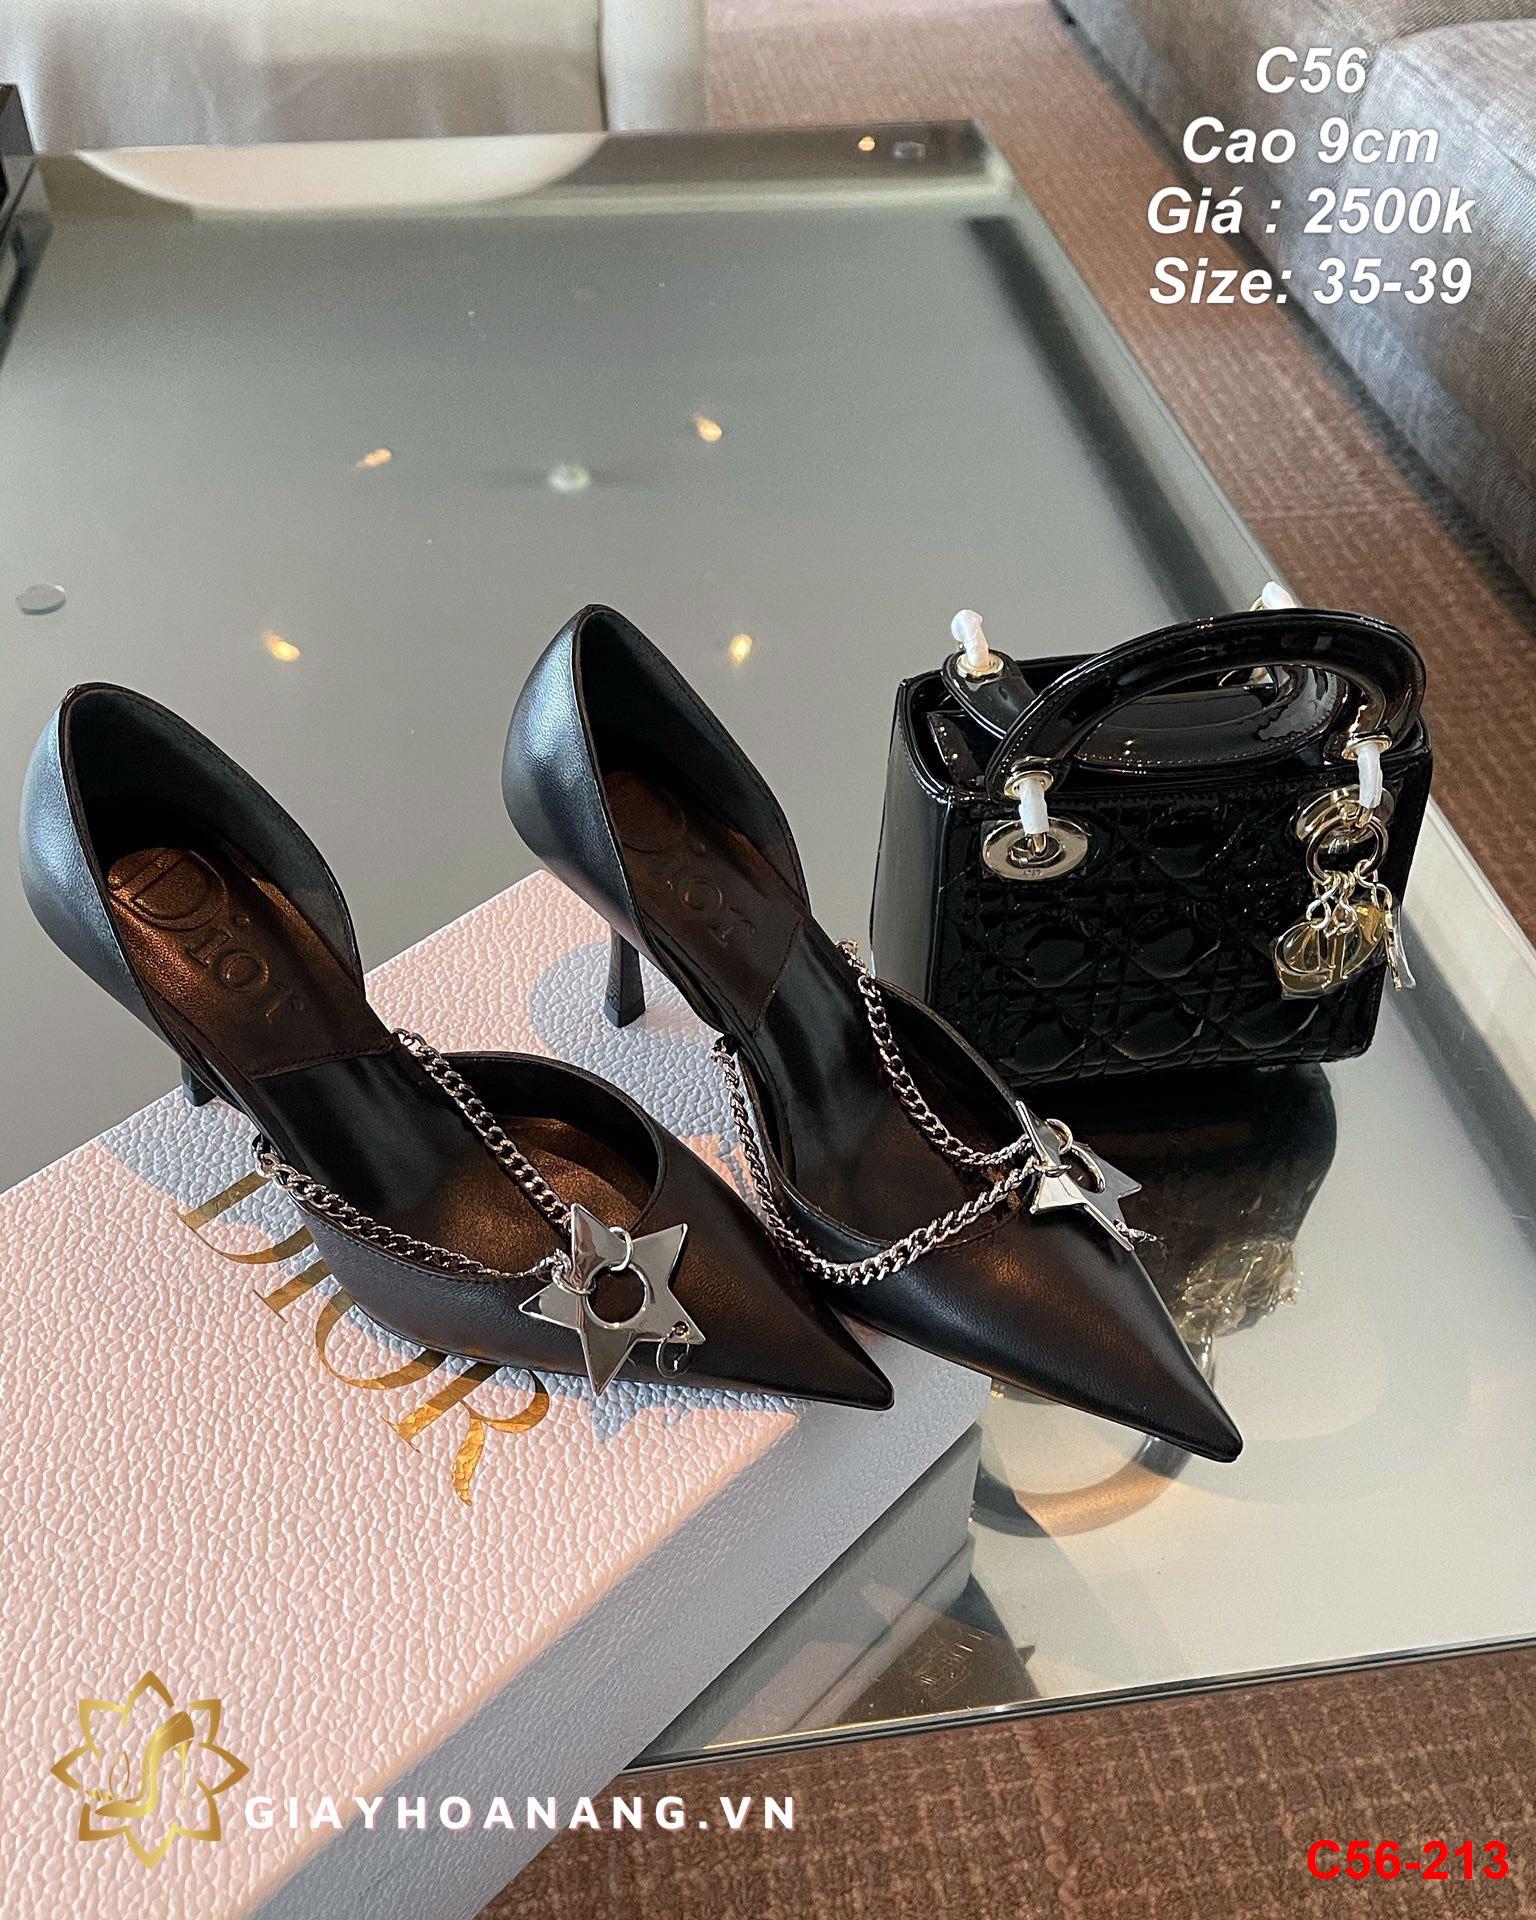 C56-213 Dior giày cao 9cm siêu cấp